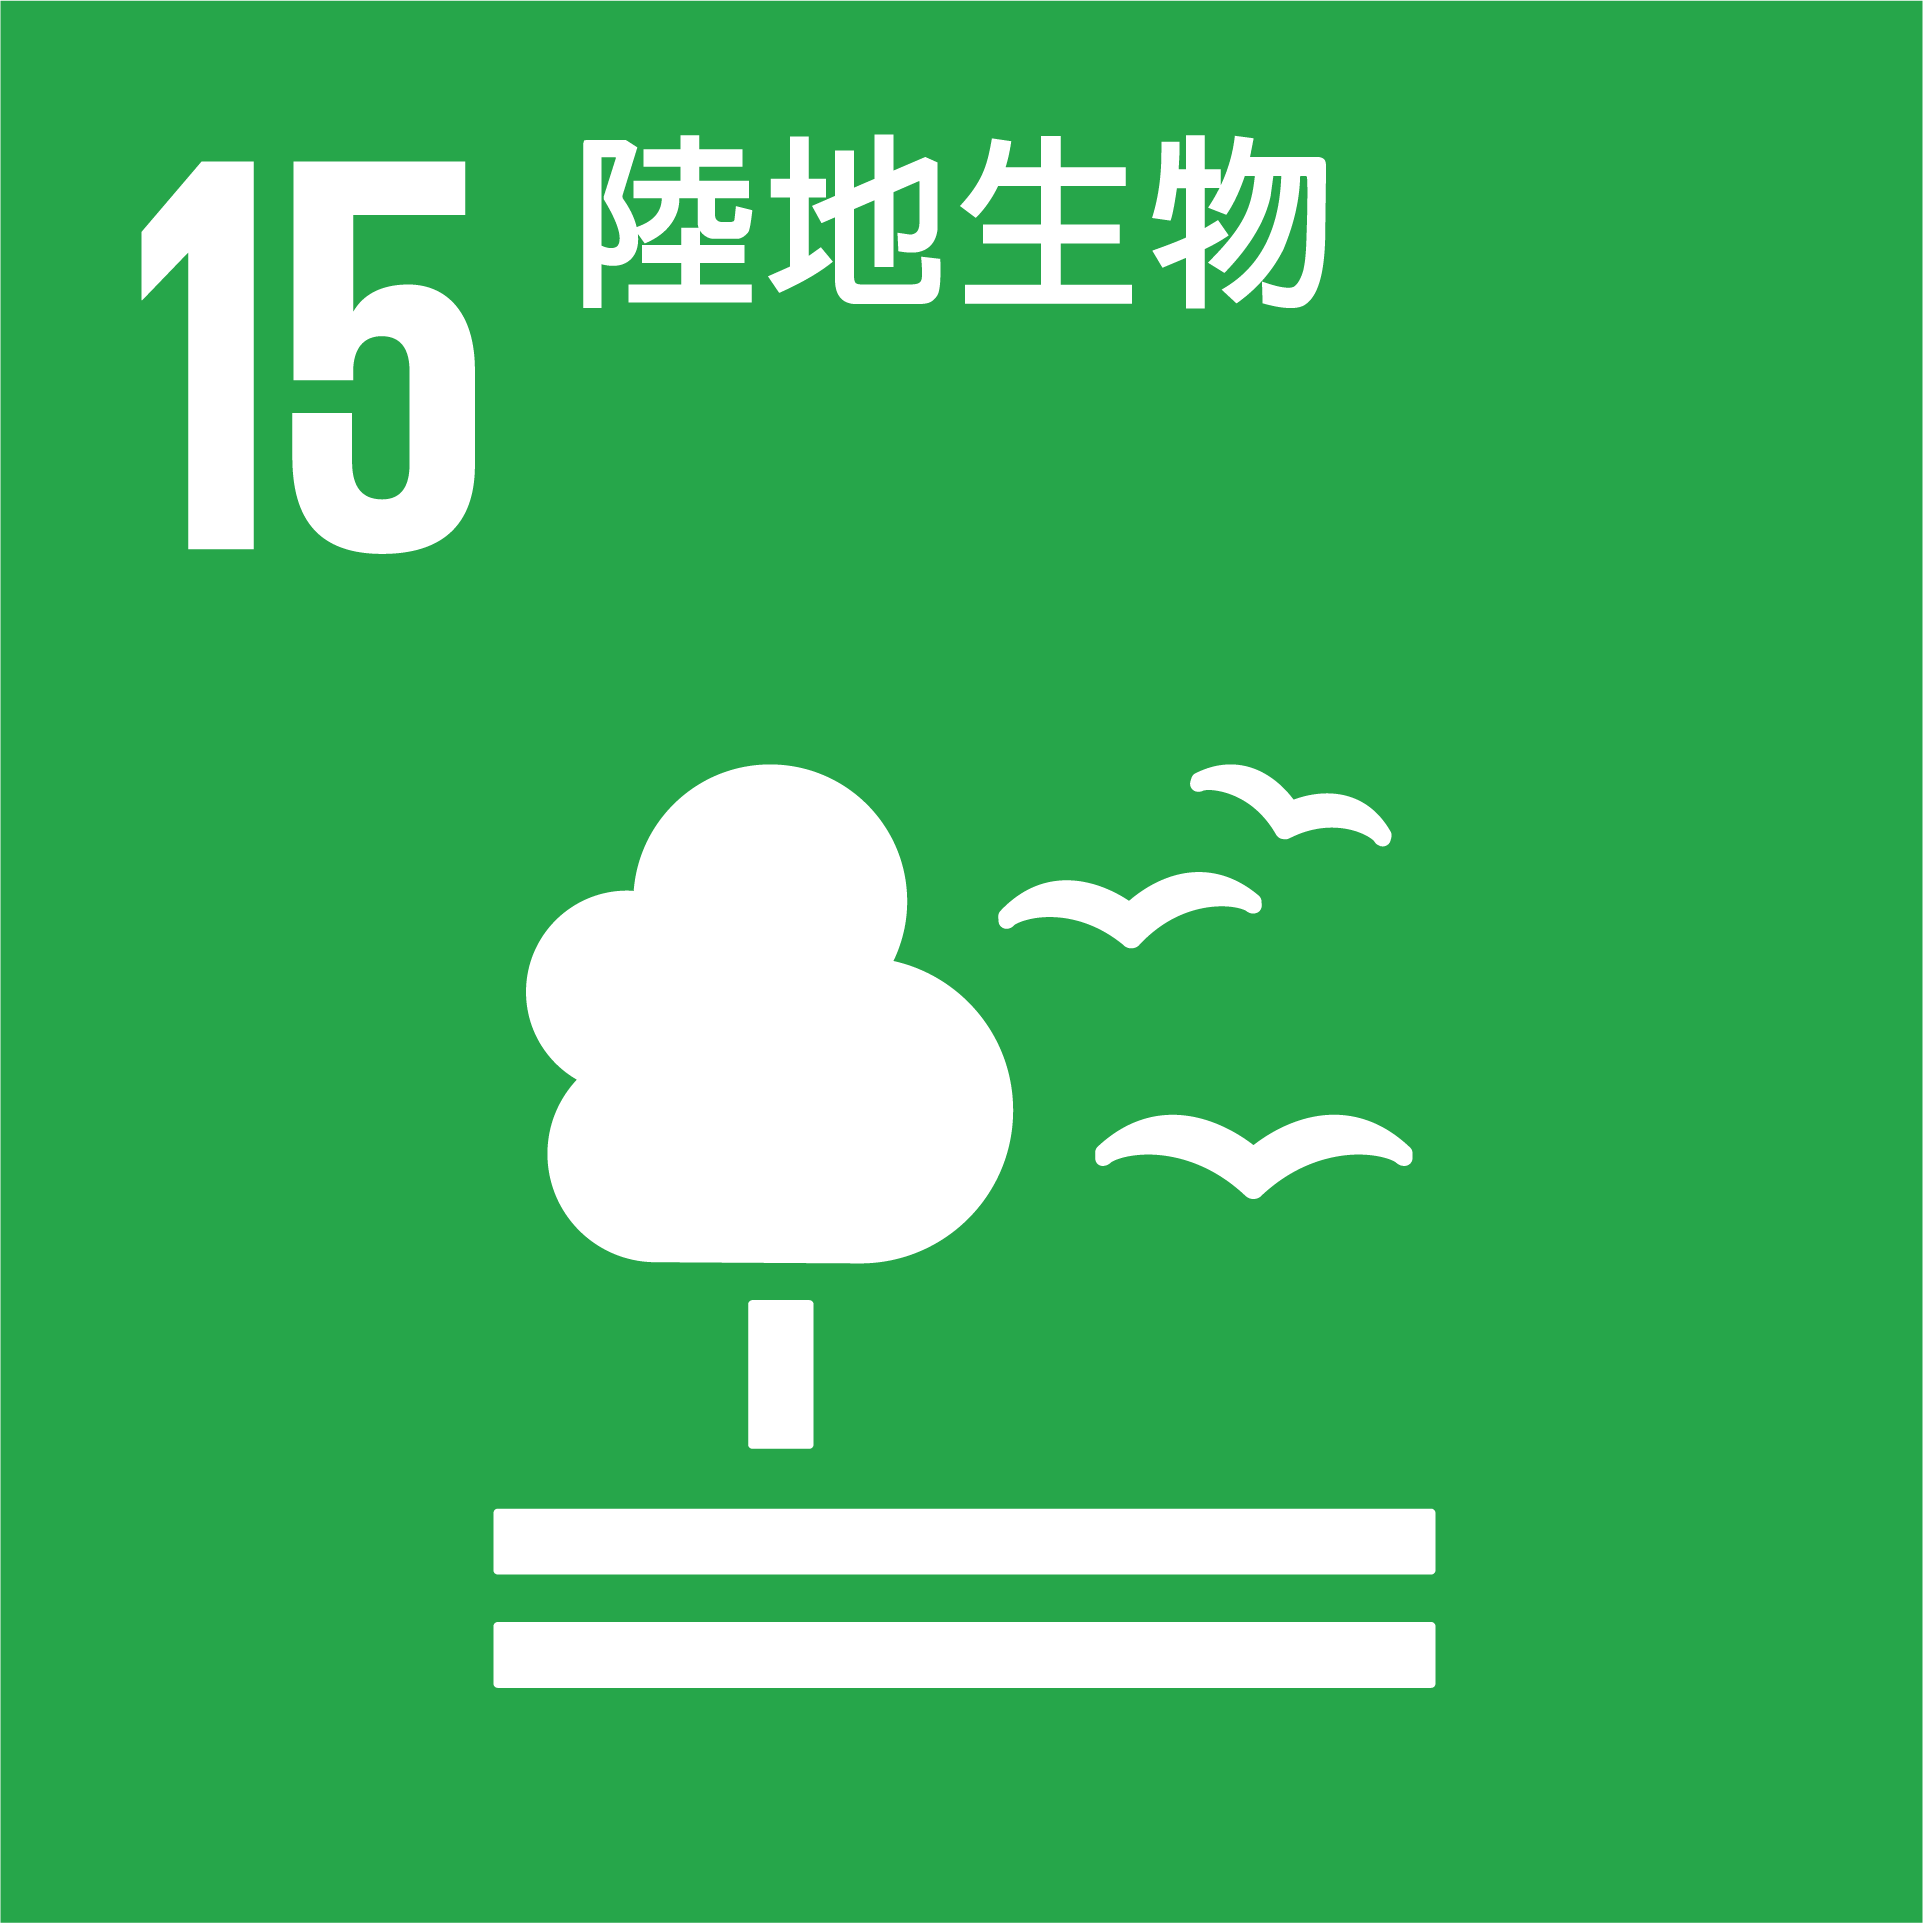 SDG vertical logo icons Chi 15